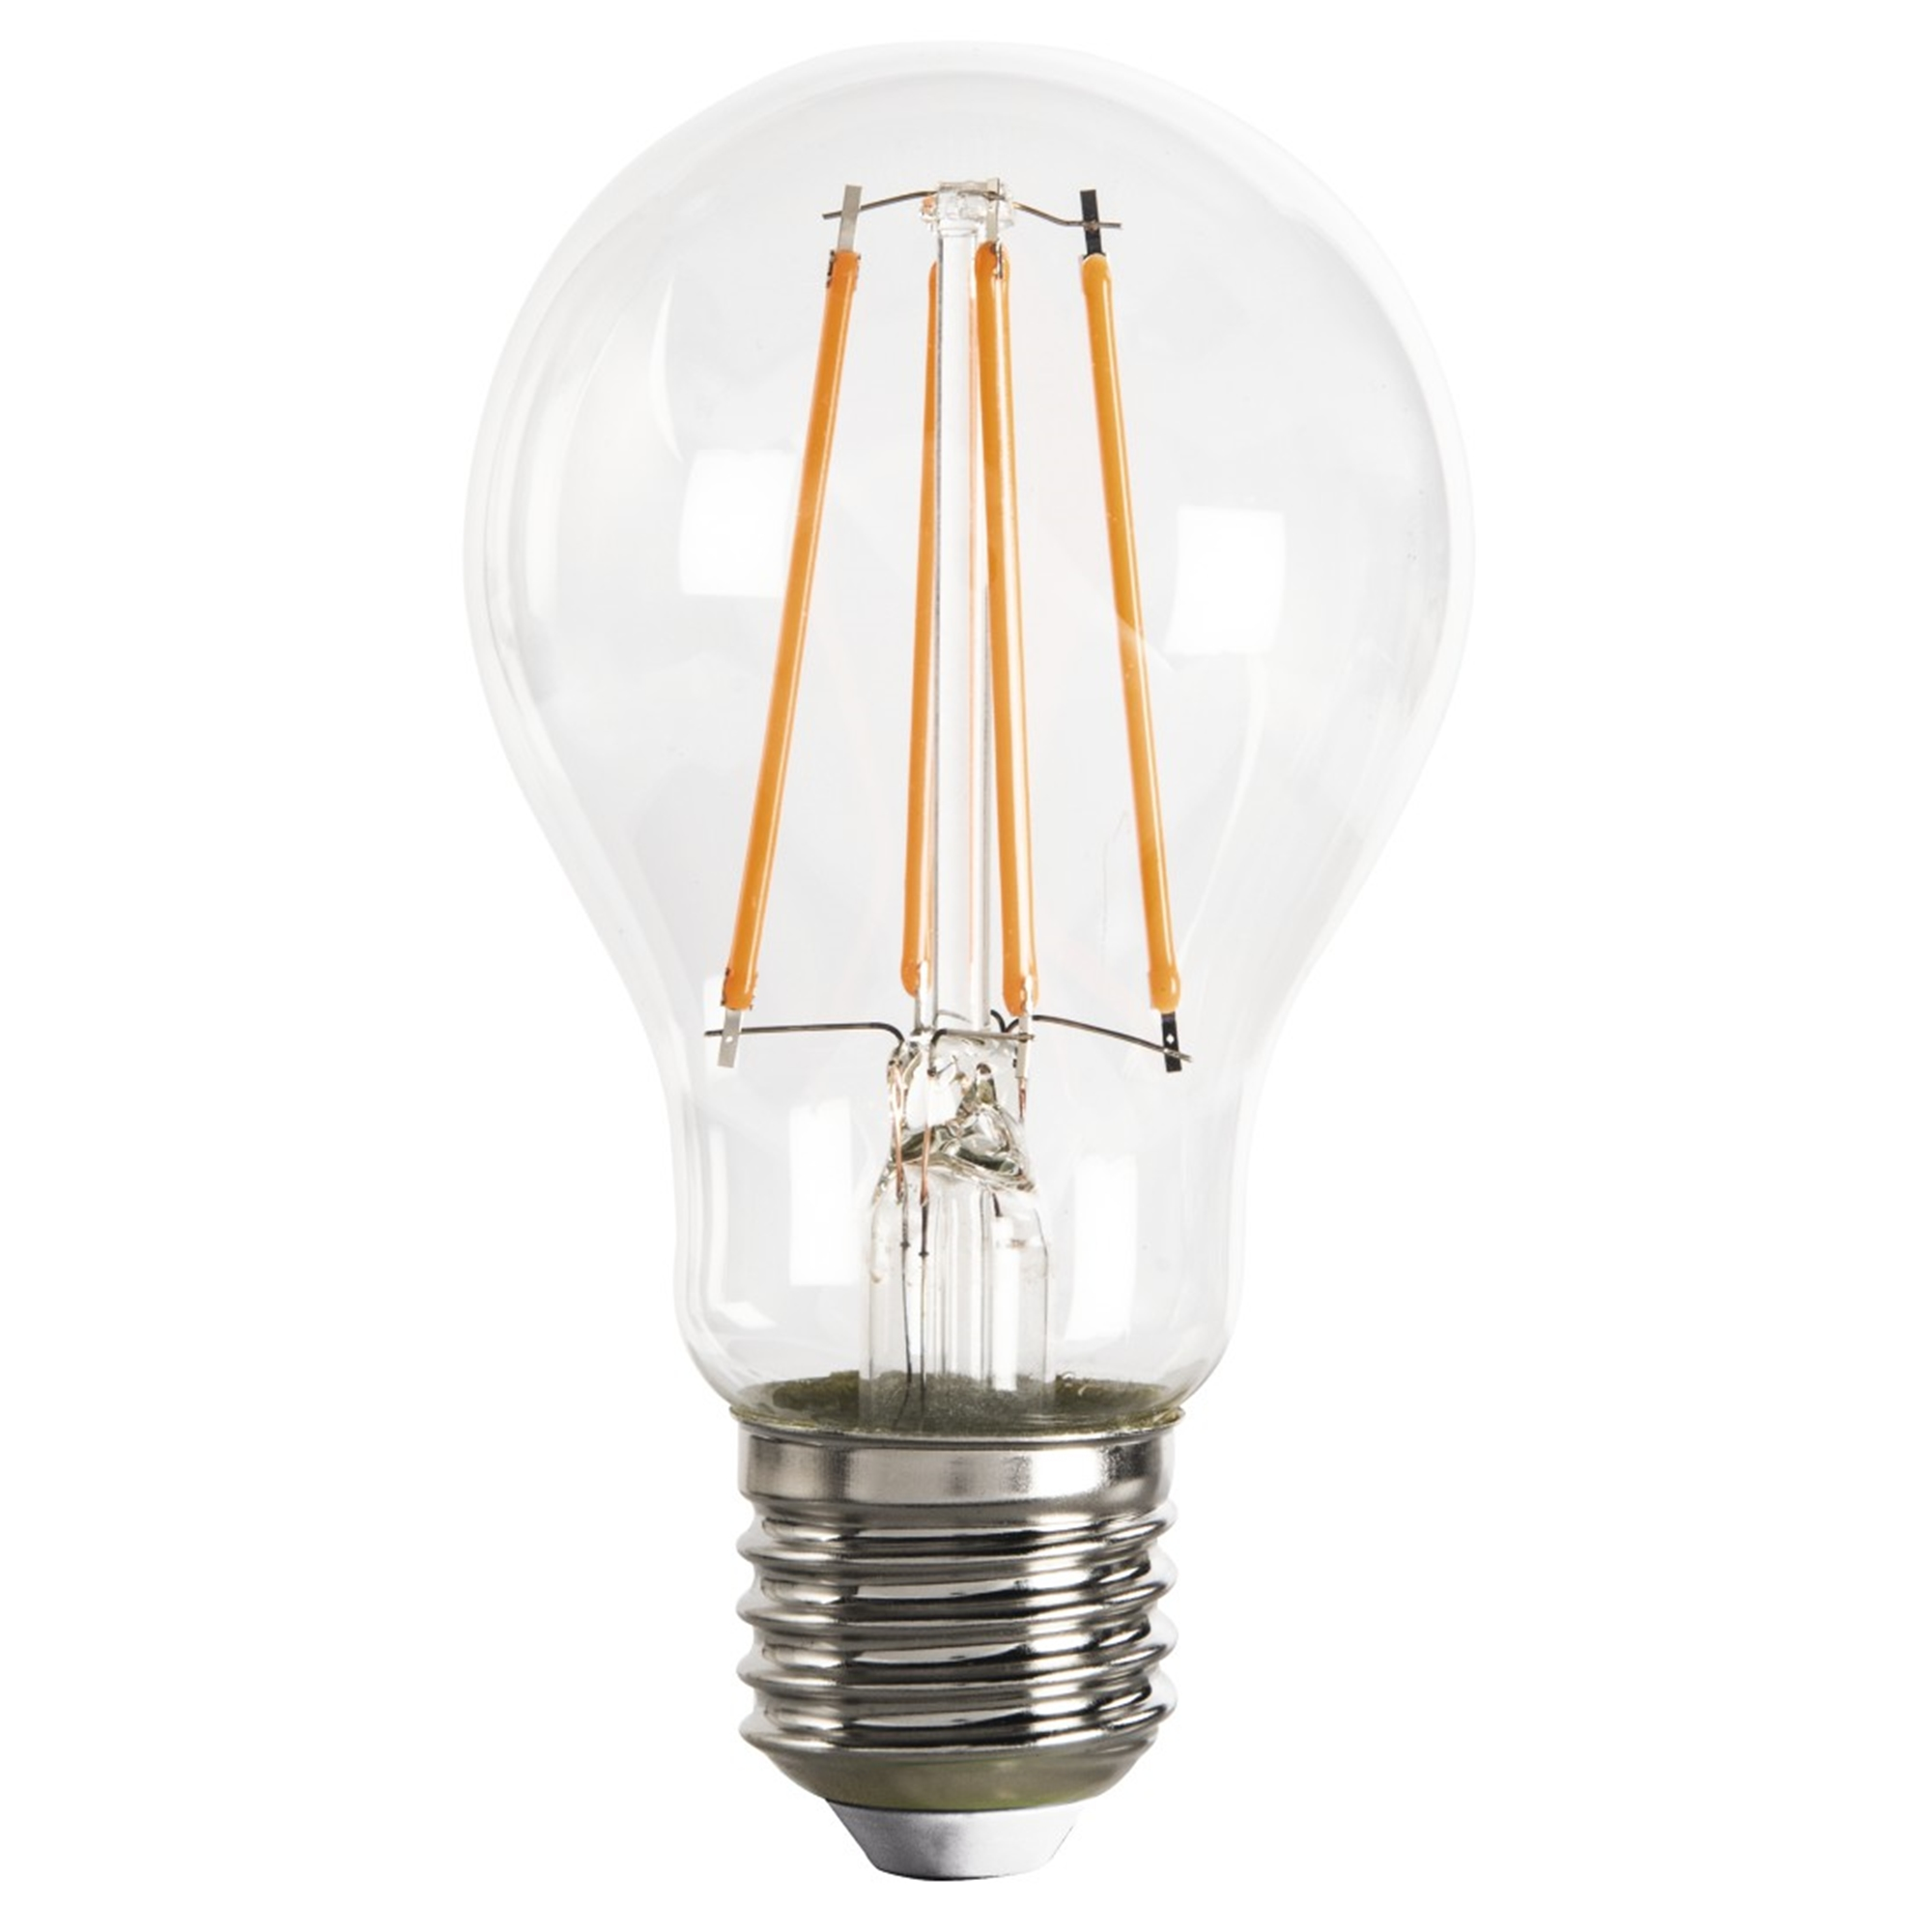 E27, LED-Lampe XAVAX E27 Violett Pflanzen-Wachstumslampe, 8W